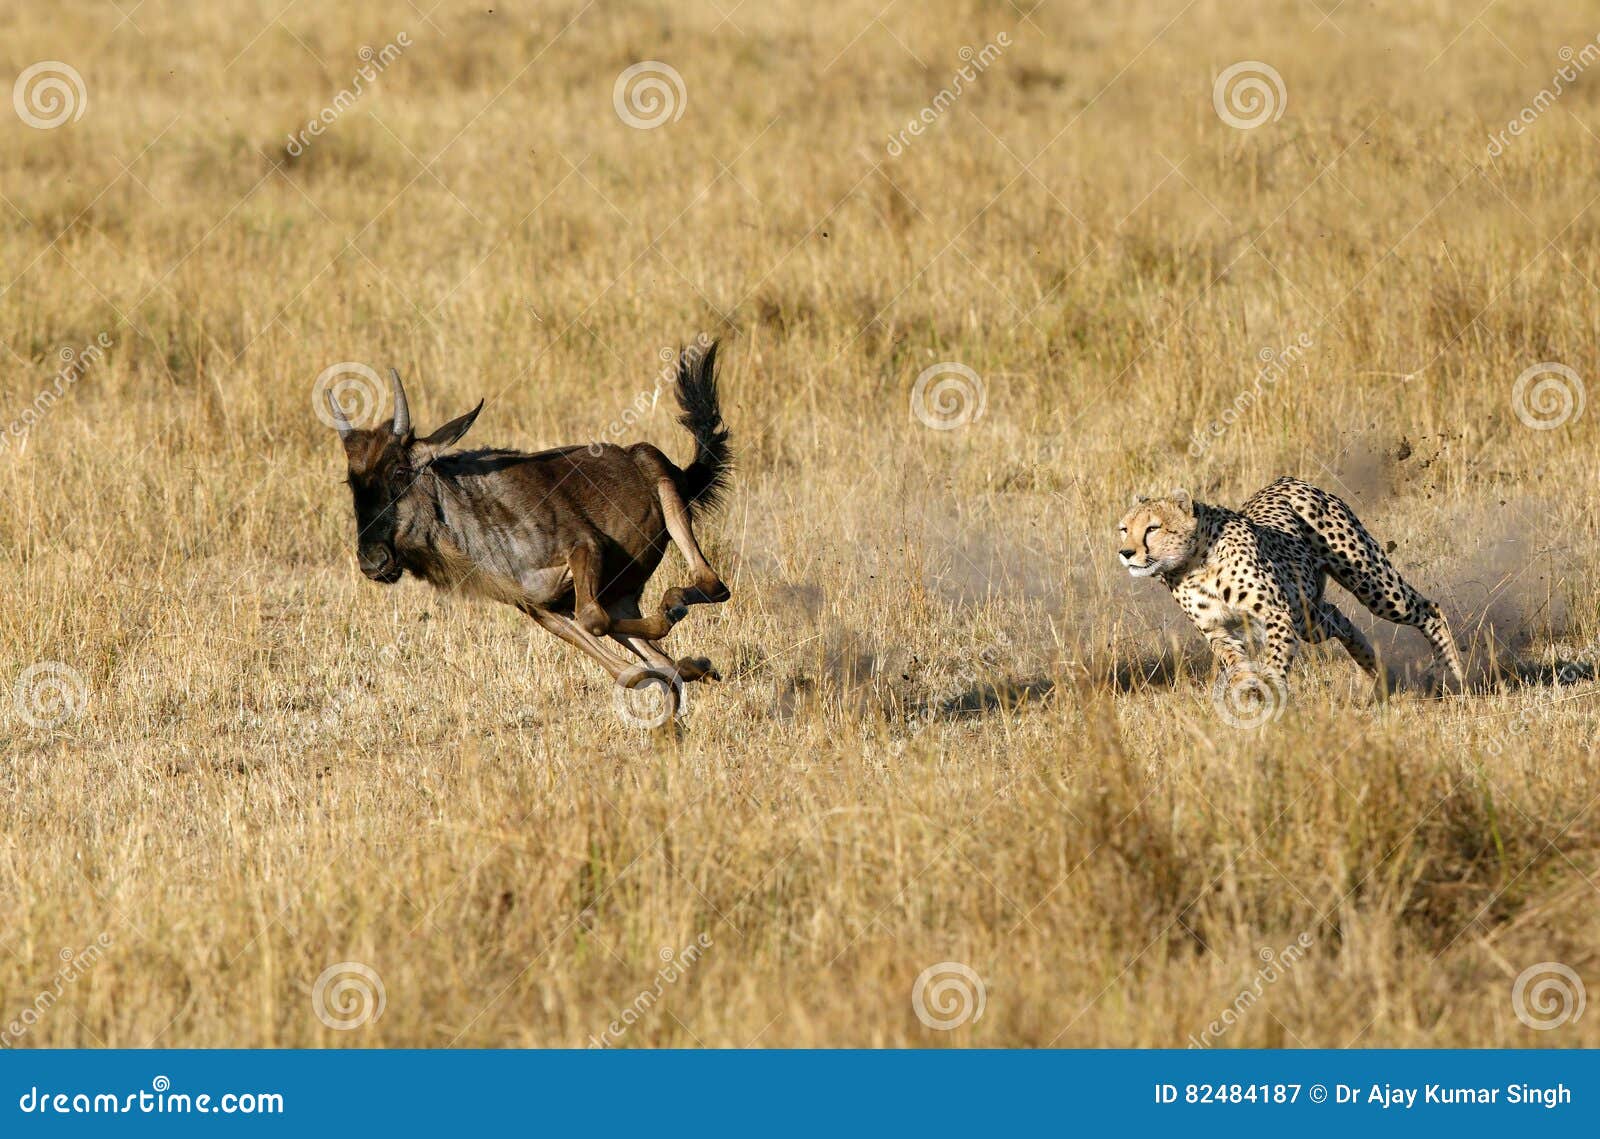 mussiara cheetah chasing a wildebeest